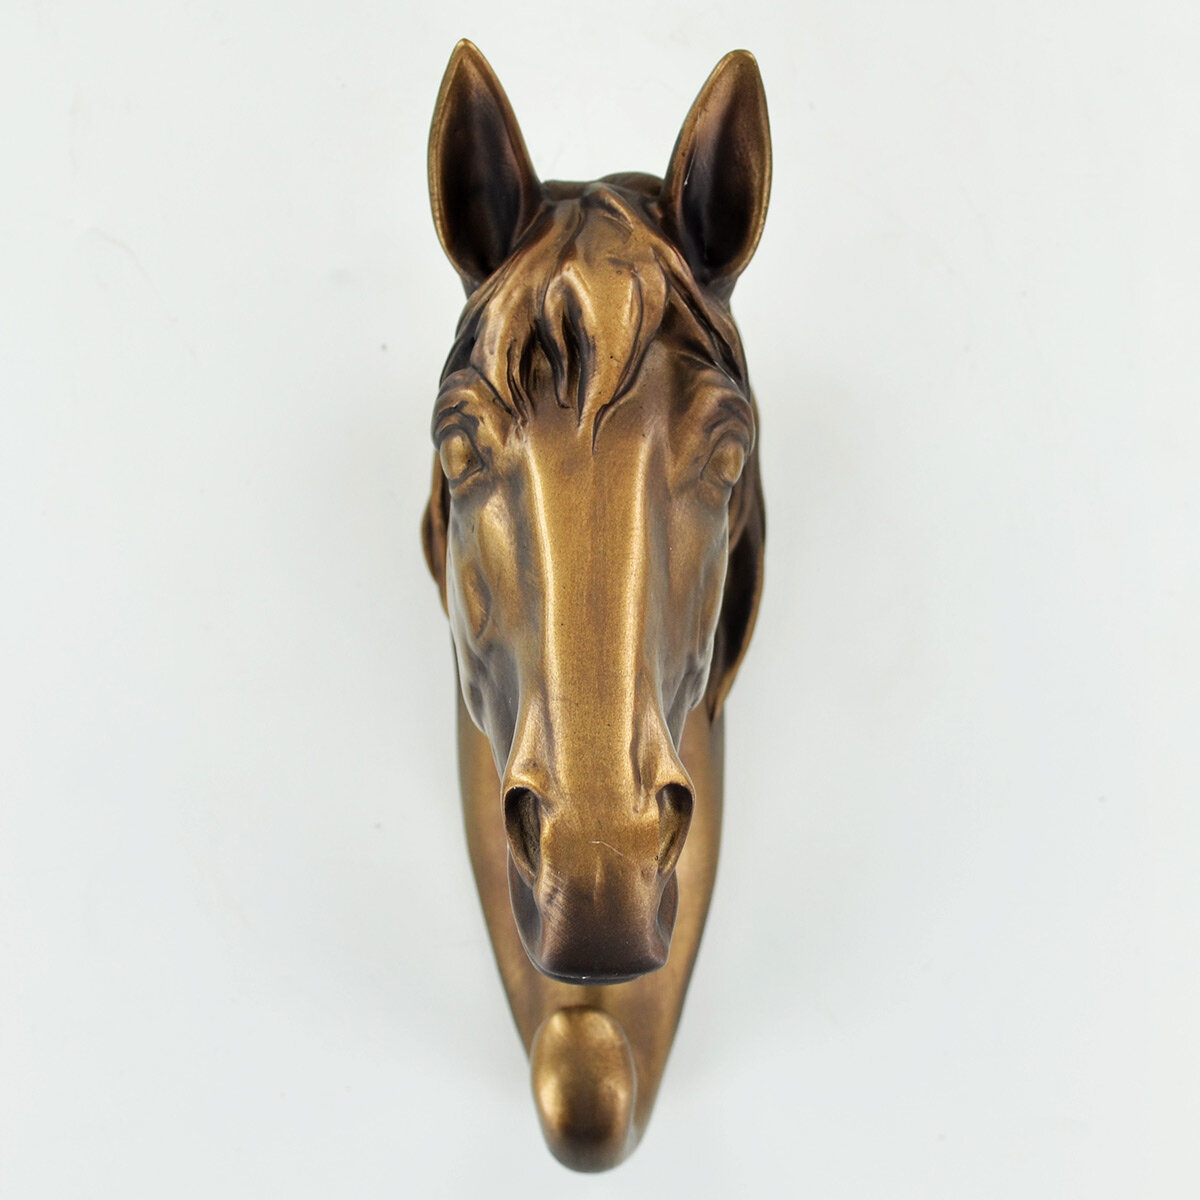 Details about   Metal Decorative Horse Head Coat Hook Figurine Lot of 4 Pcs 